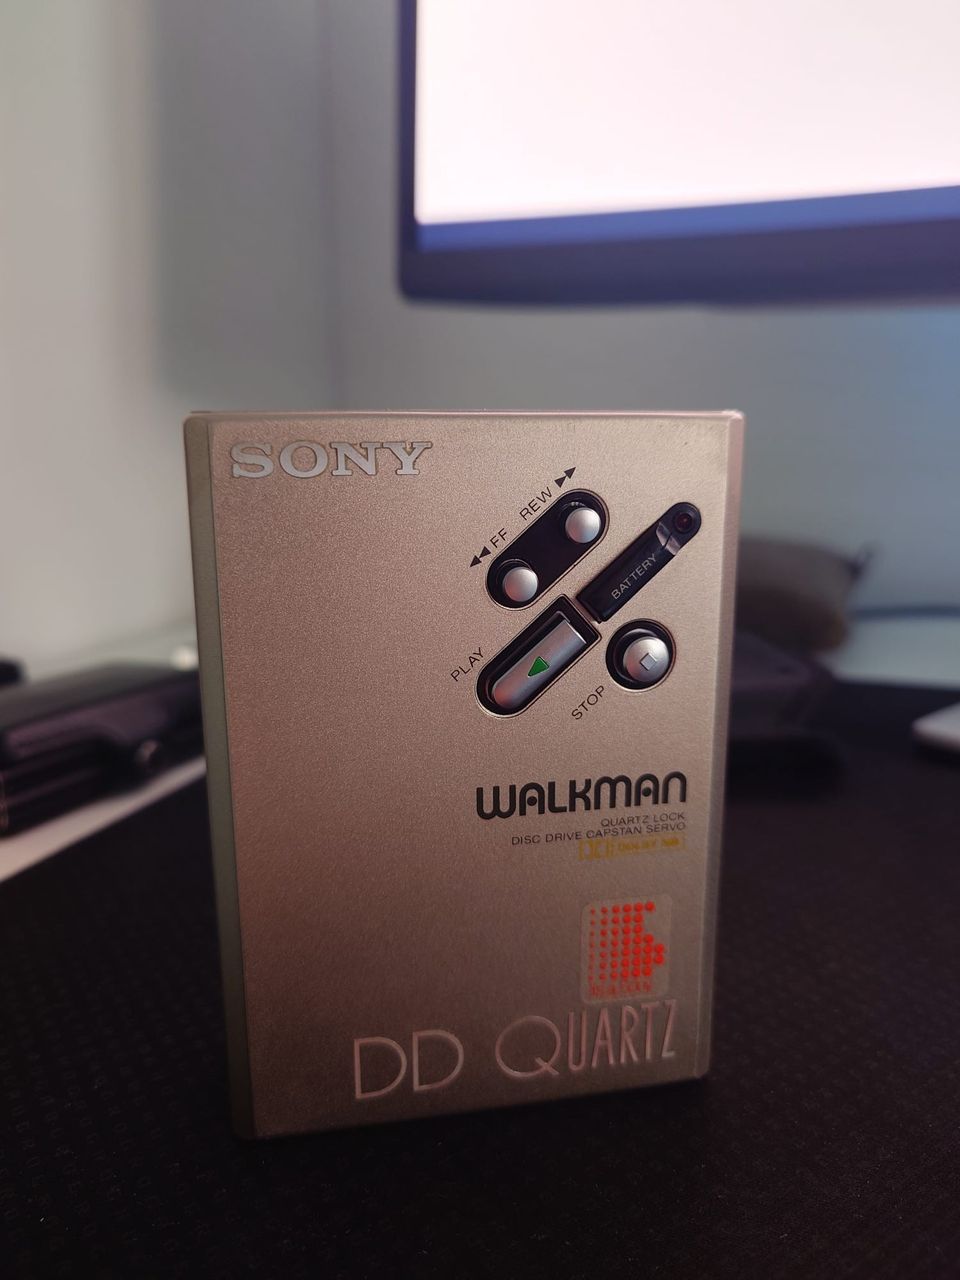 Sony WM-DD3 Walkman Champagne 1989